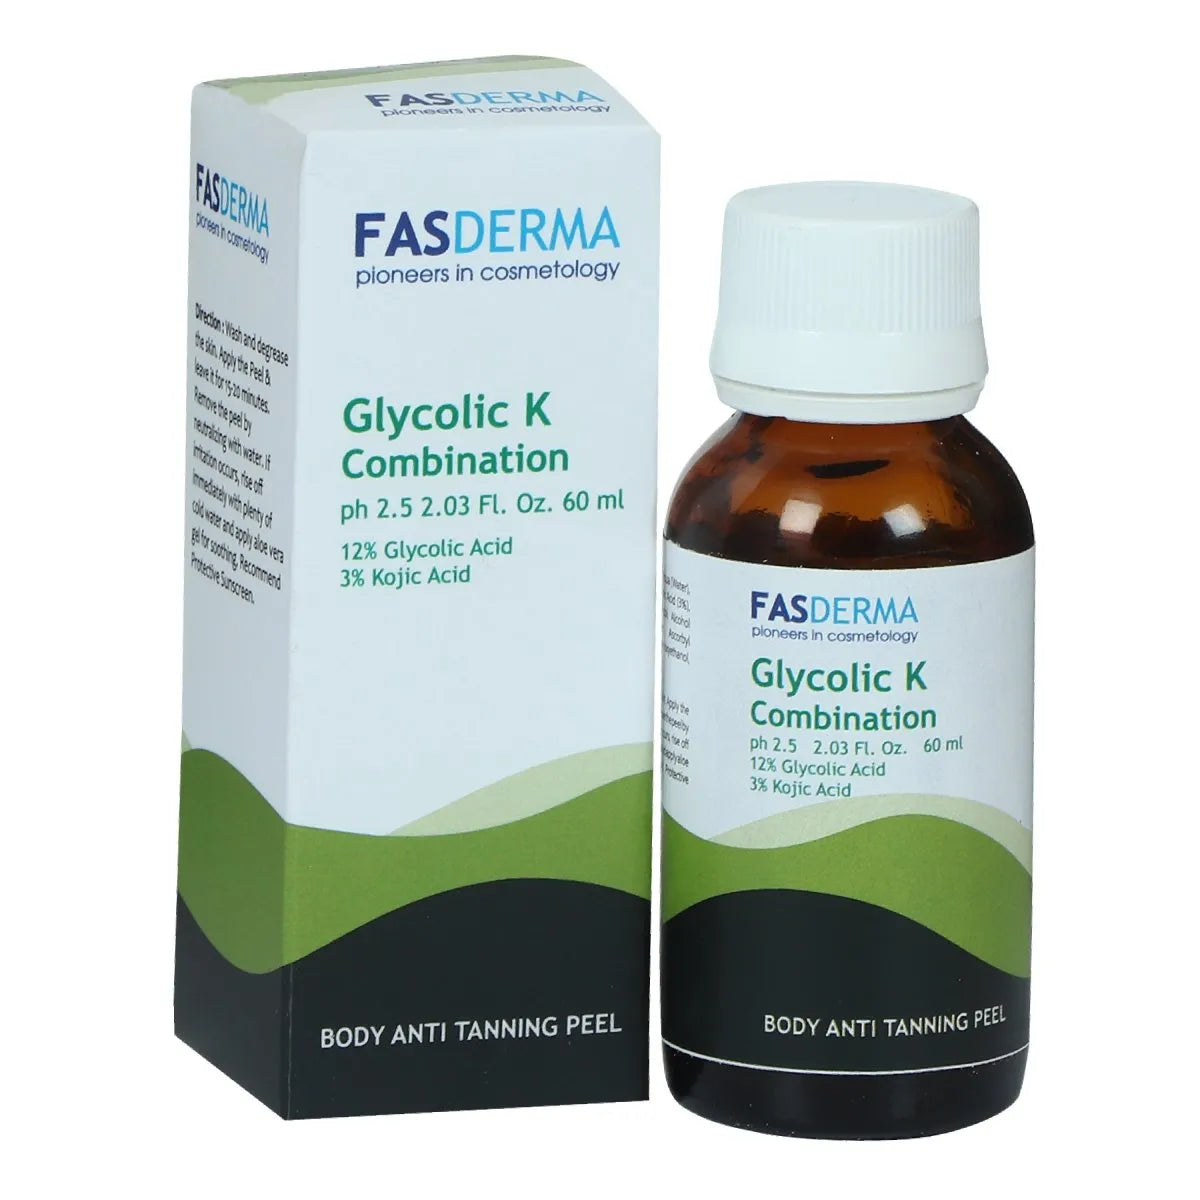 Fasderma Glycolic K Combination - Body Anti Tanning Peel, 60ml - Fasderma India